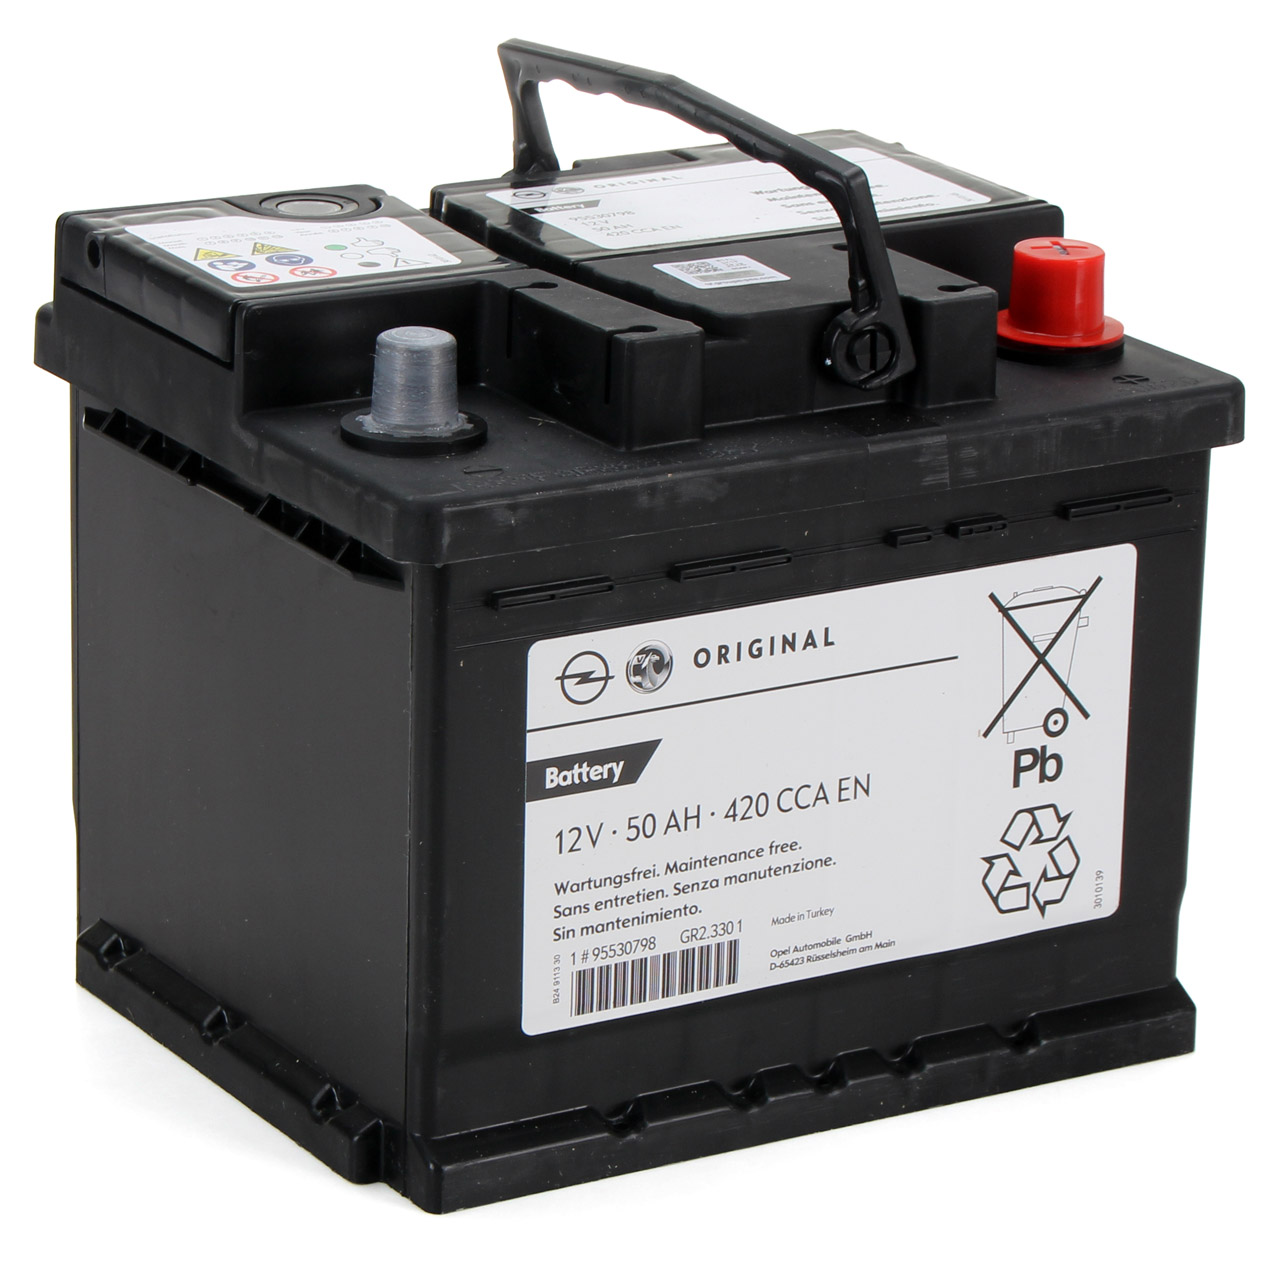 ORIGINAL GM Opel Autobatterie Starterbatterie 12V 50Ah 420 CCA EN